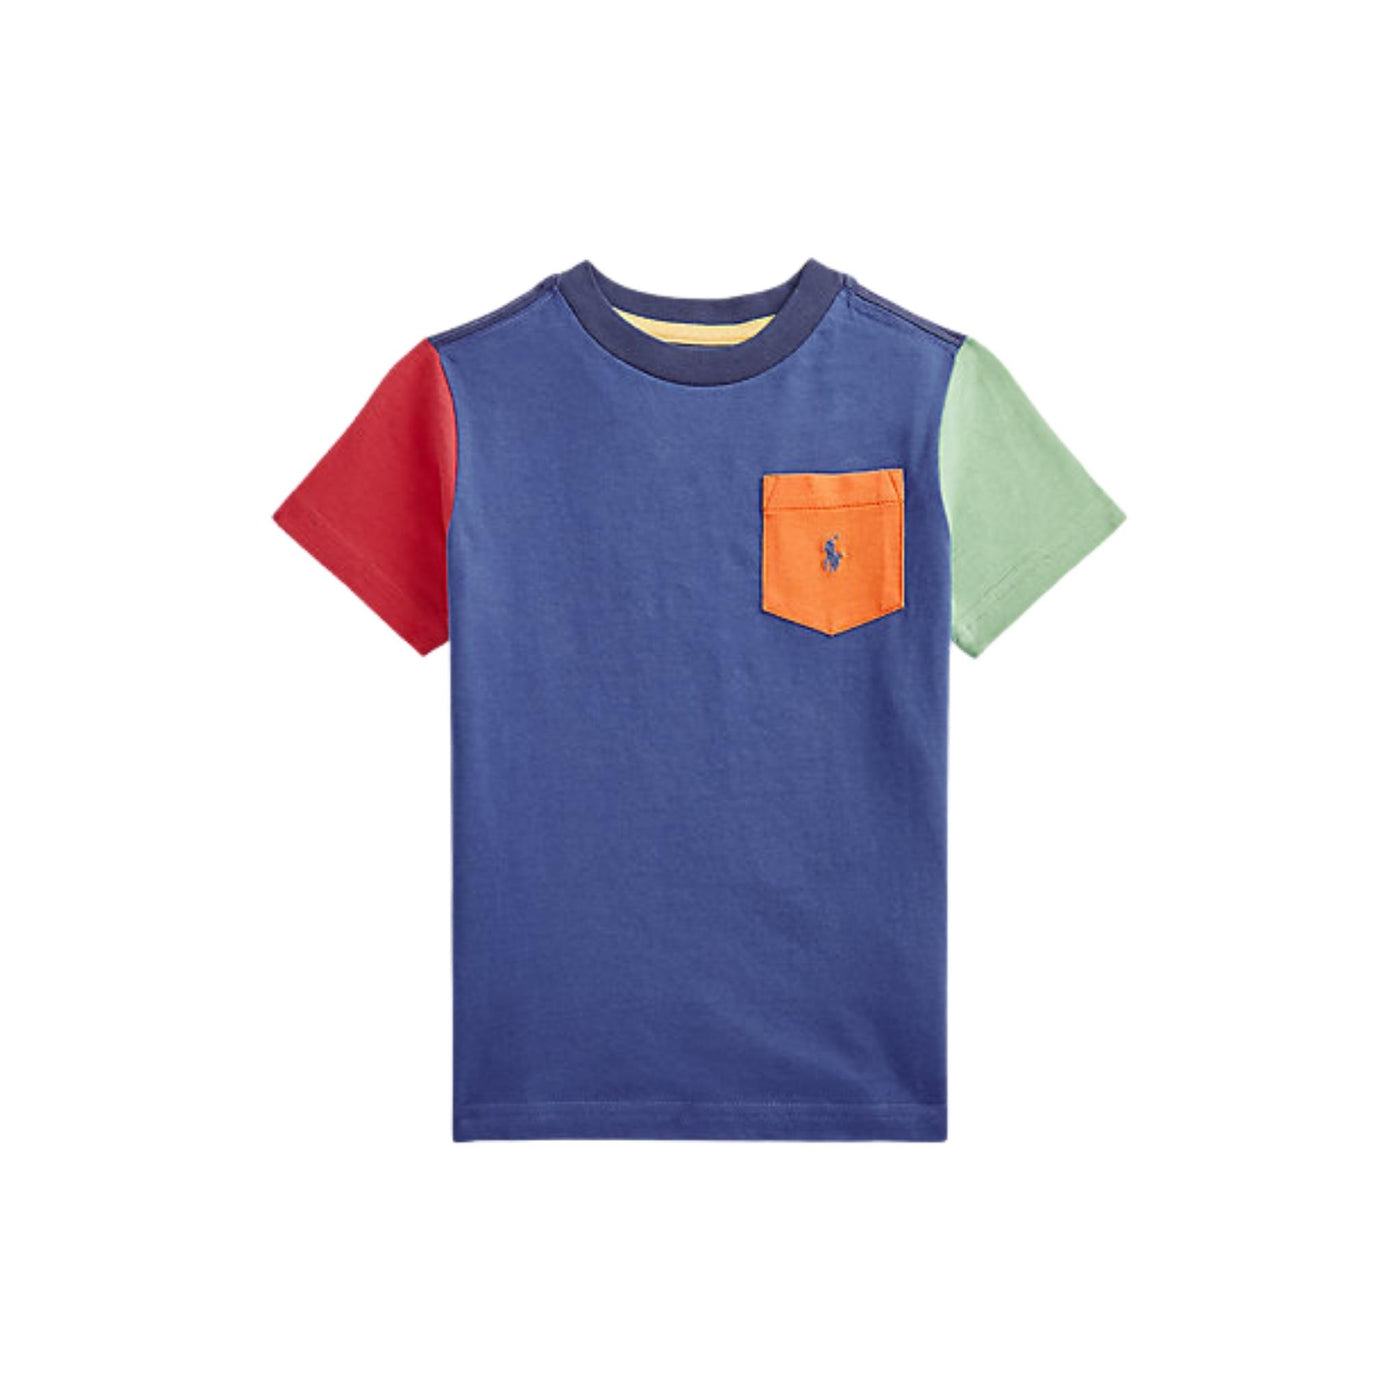 t-shirt bambino ralph lauren blocchi colore con taschino